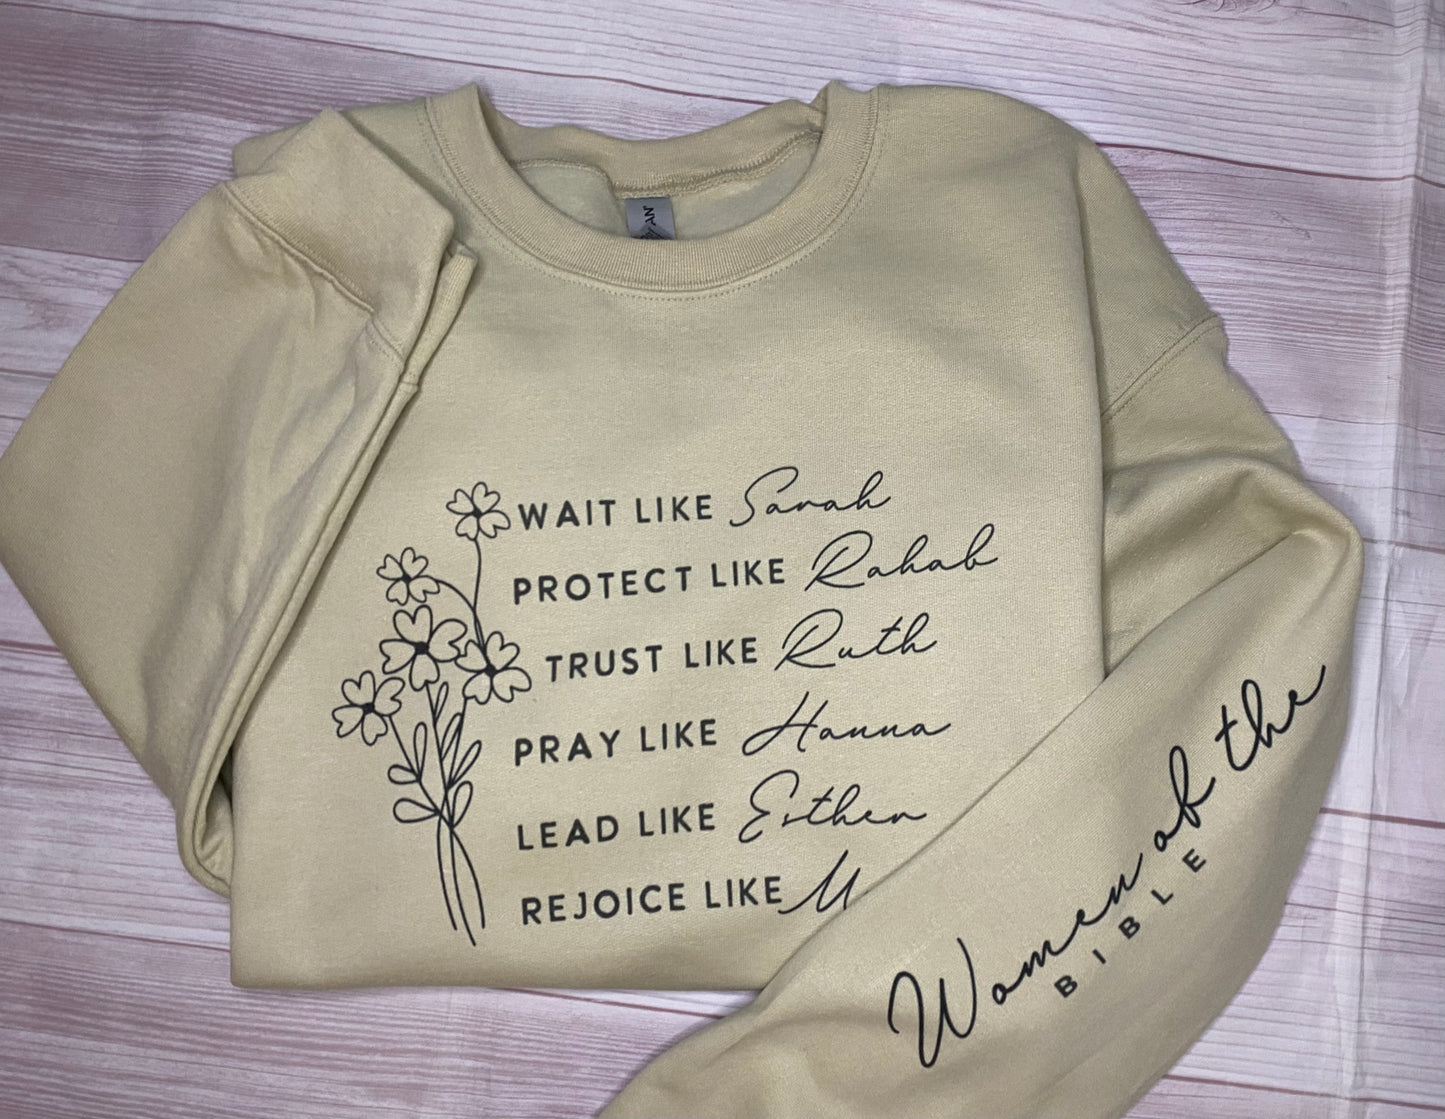 Women of the Bible Sweatshirt